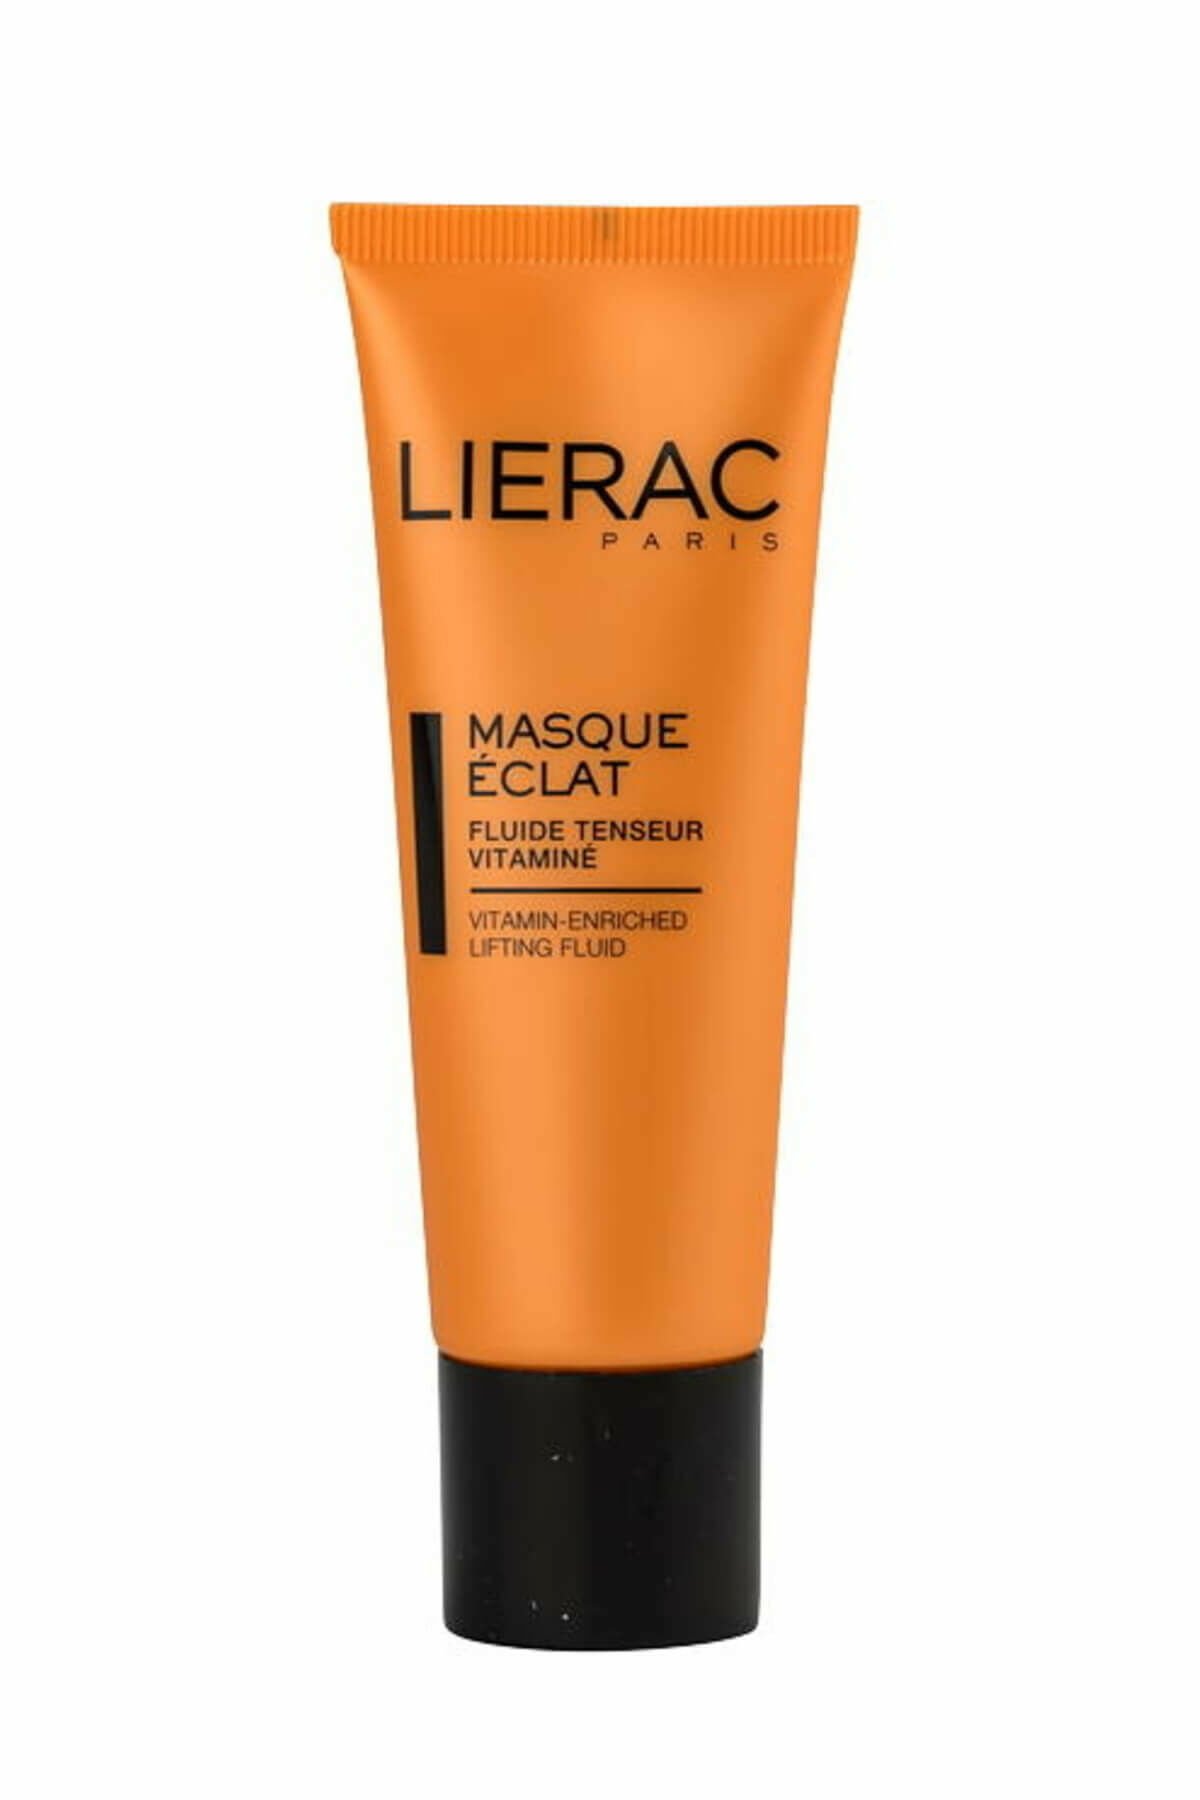 Lierac Masque Eclat 50 ml